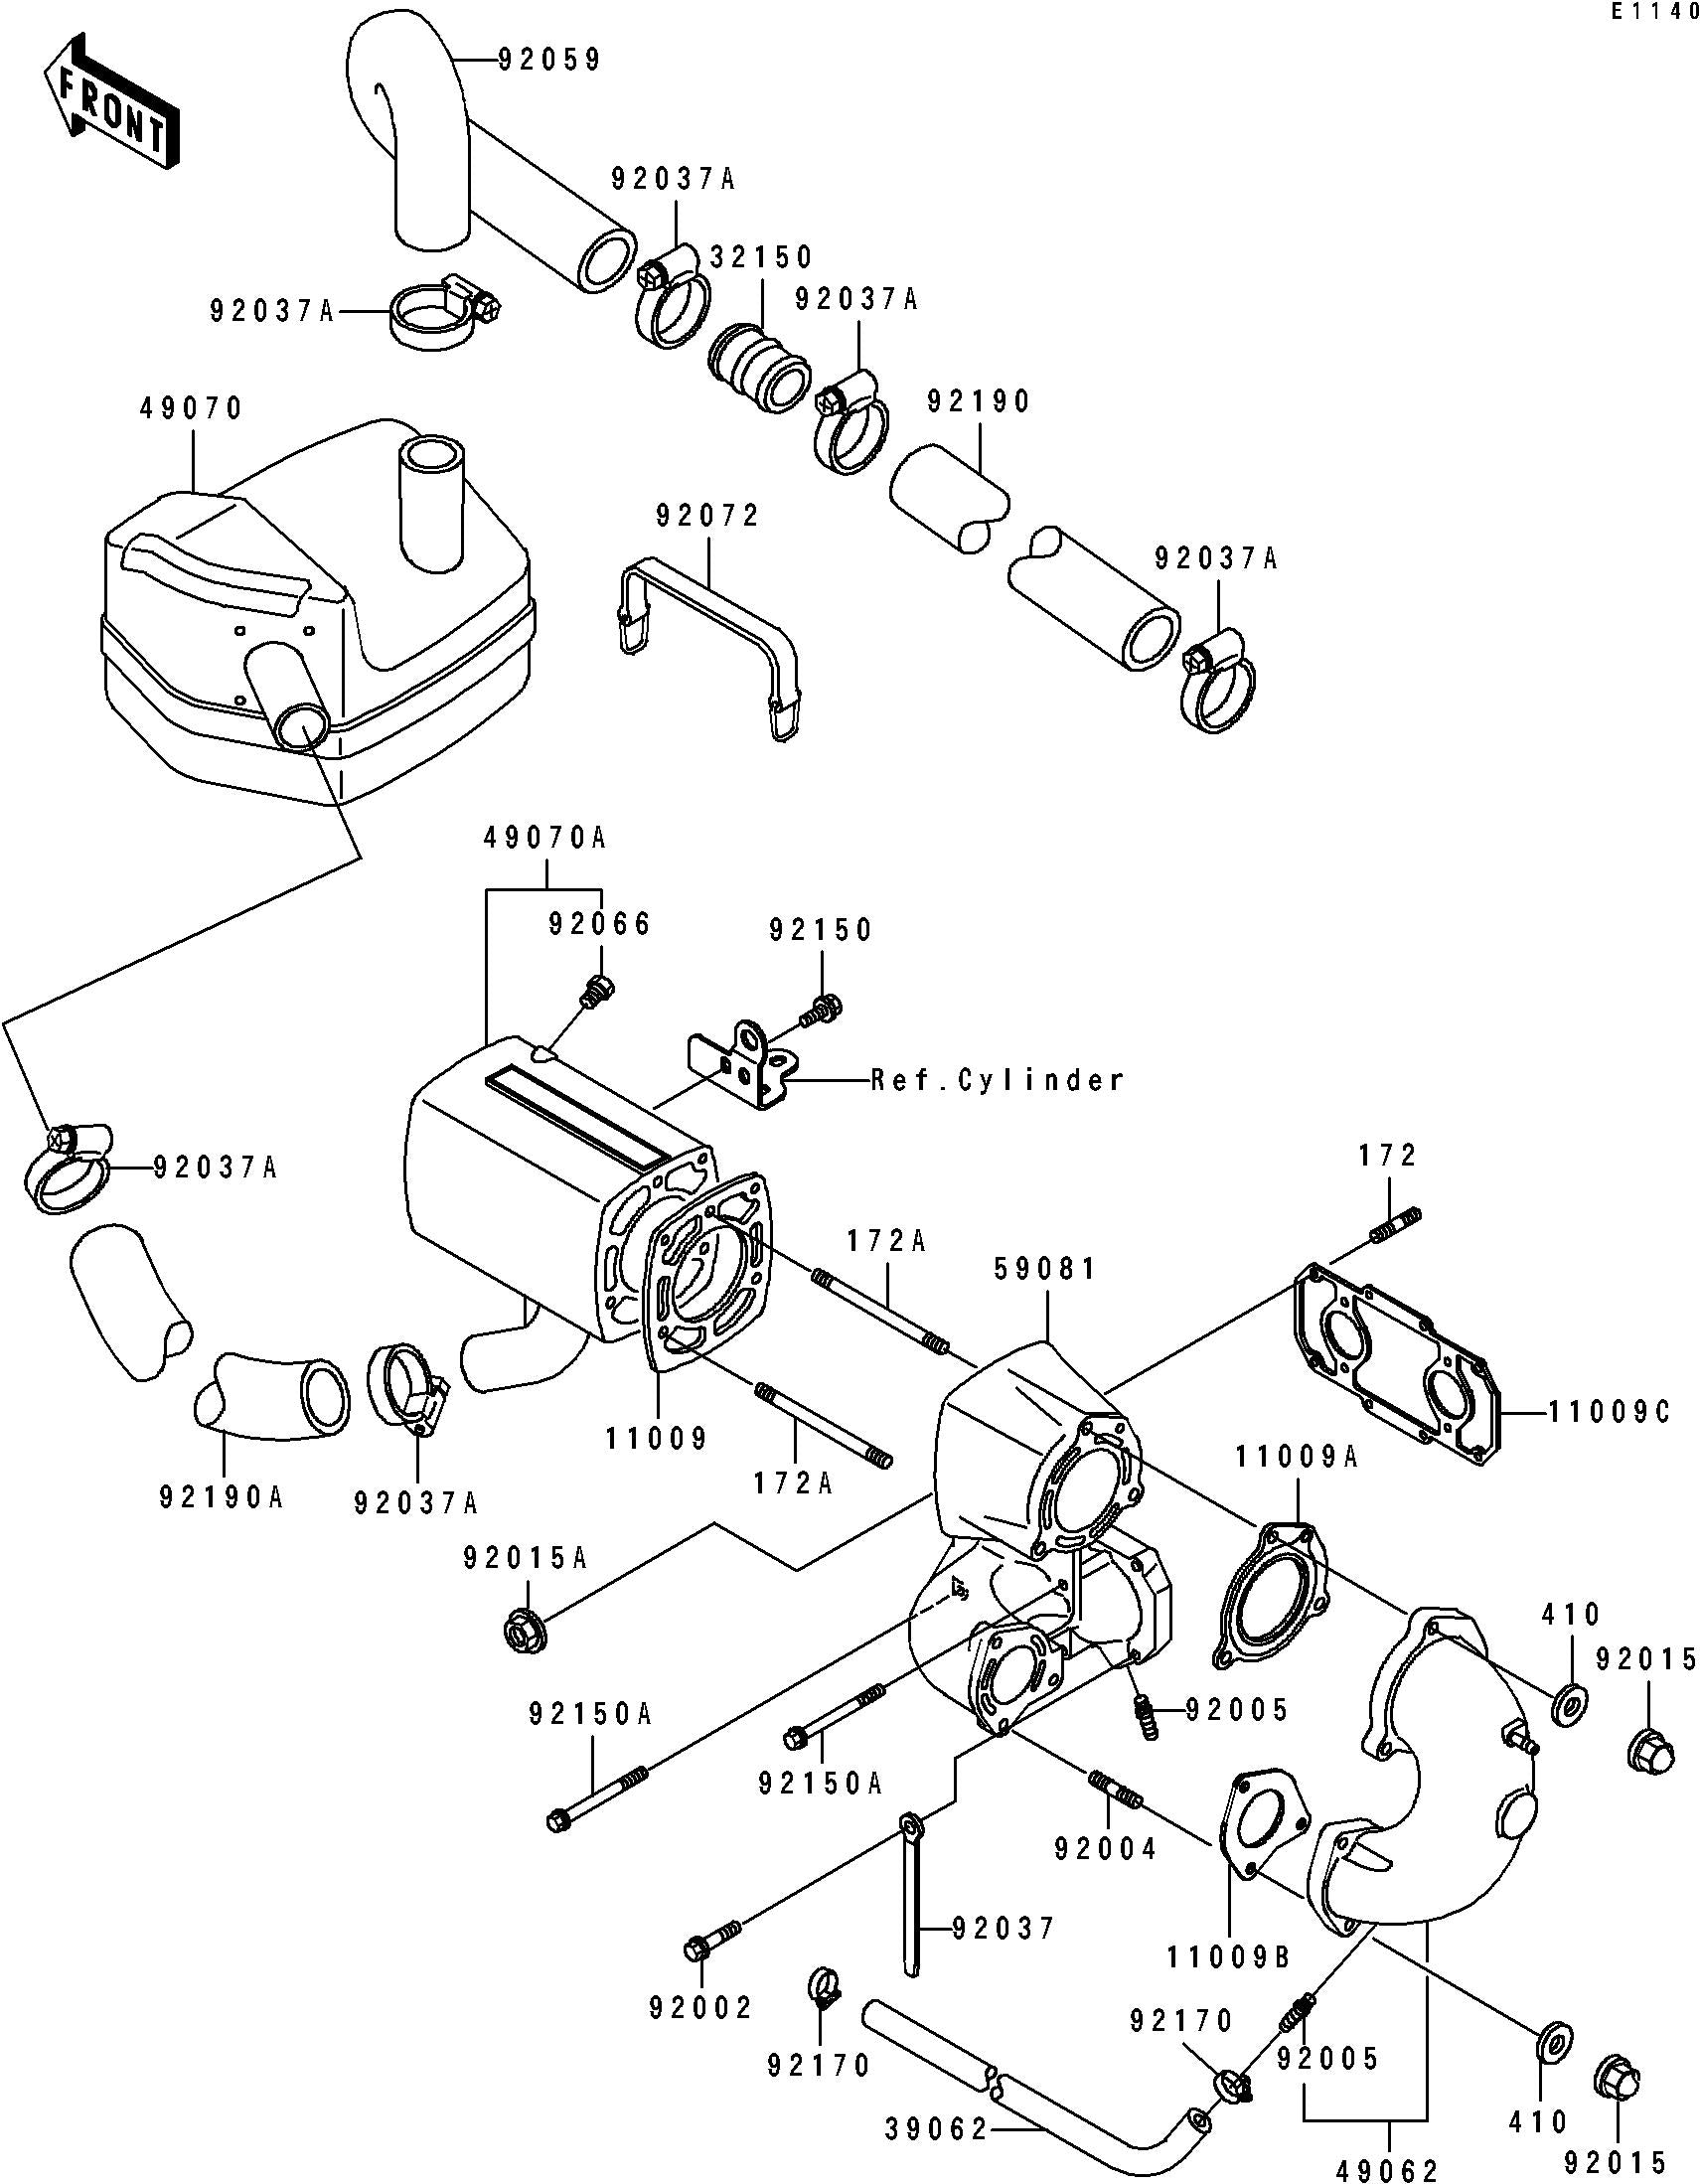 550SX'95 OEM (Mufflers) PIPE Used [K0331-27]